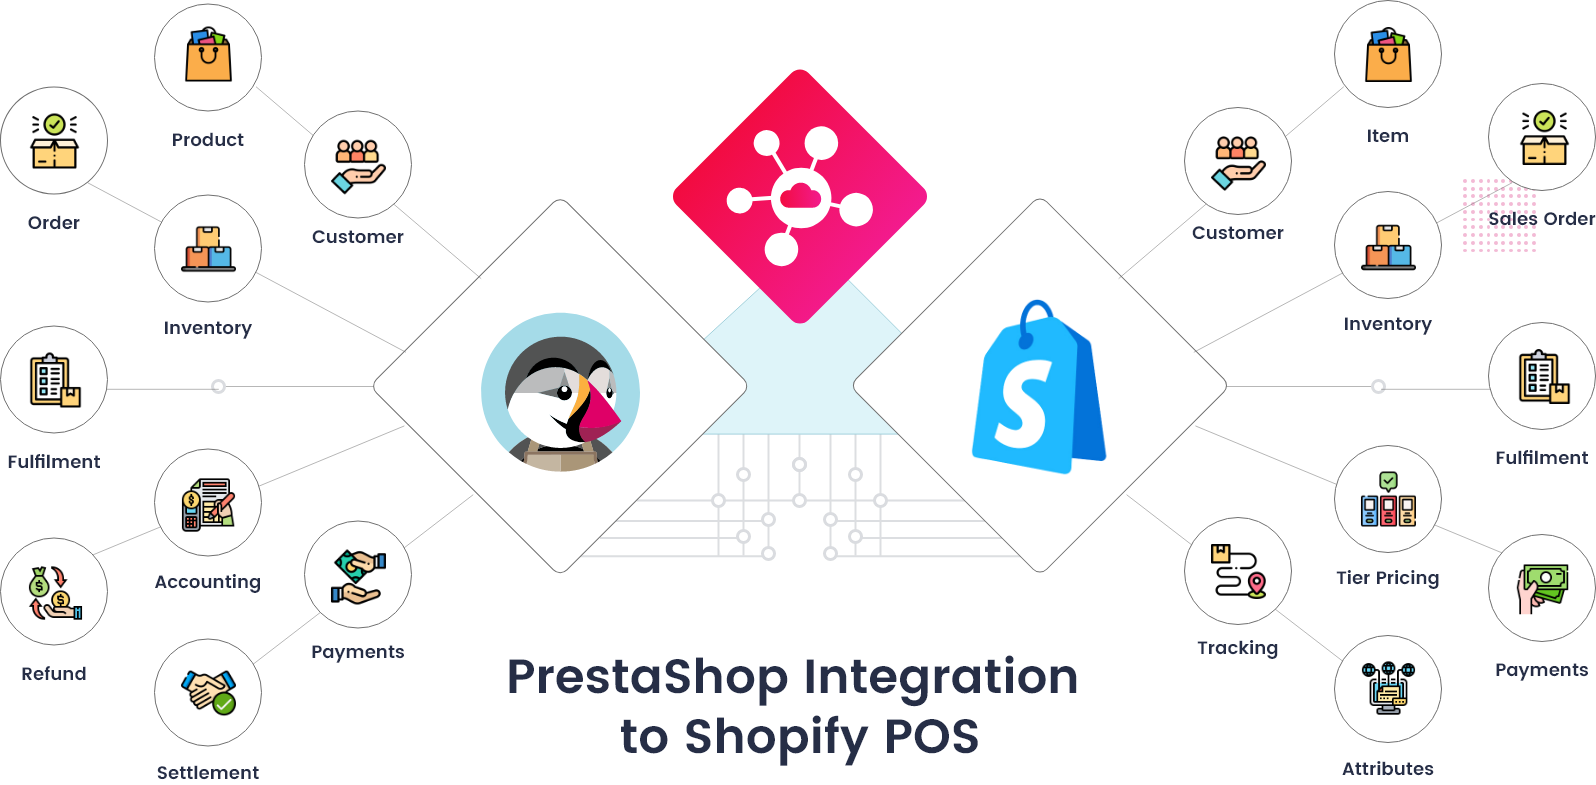 PrestaShop Shopify POS Integration